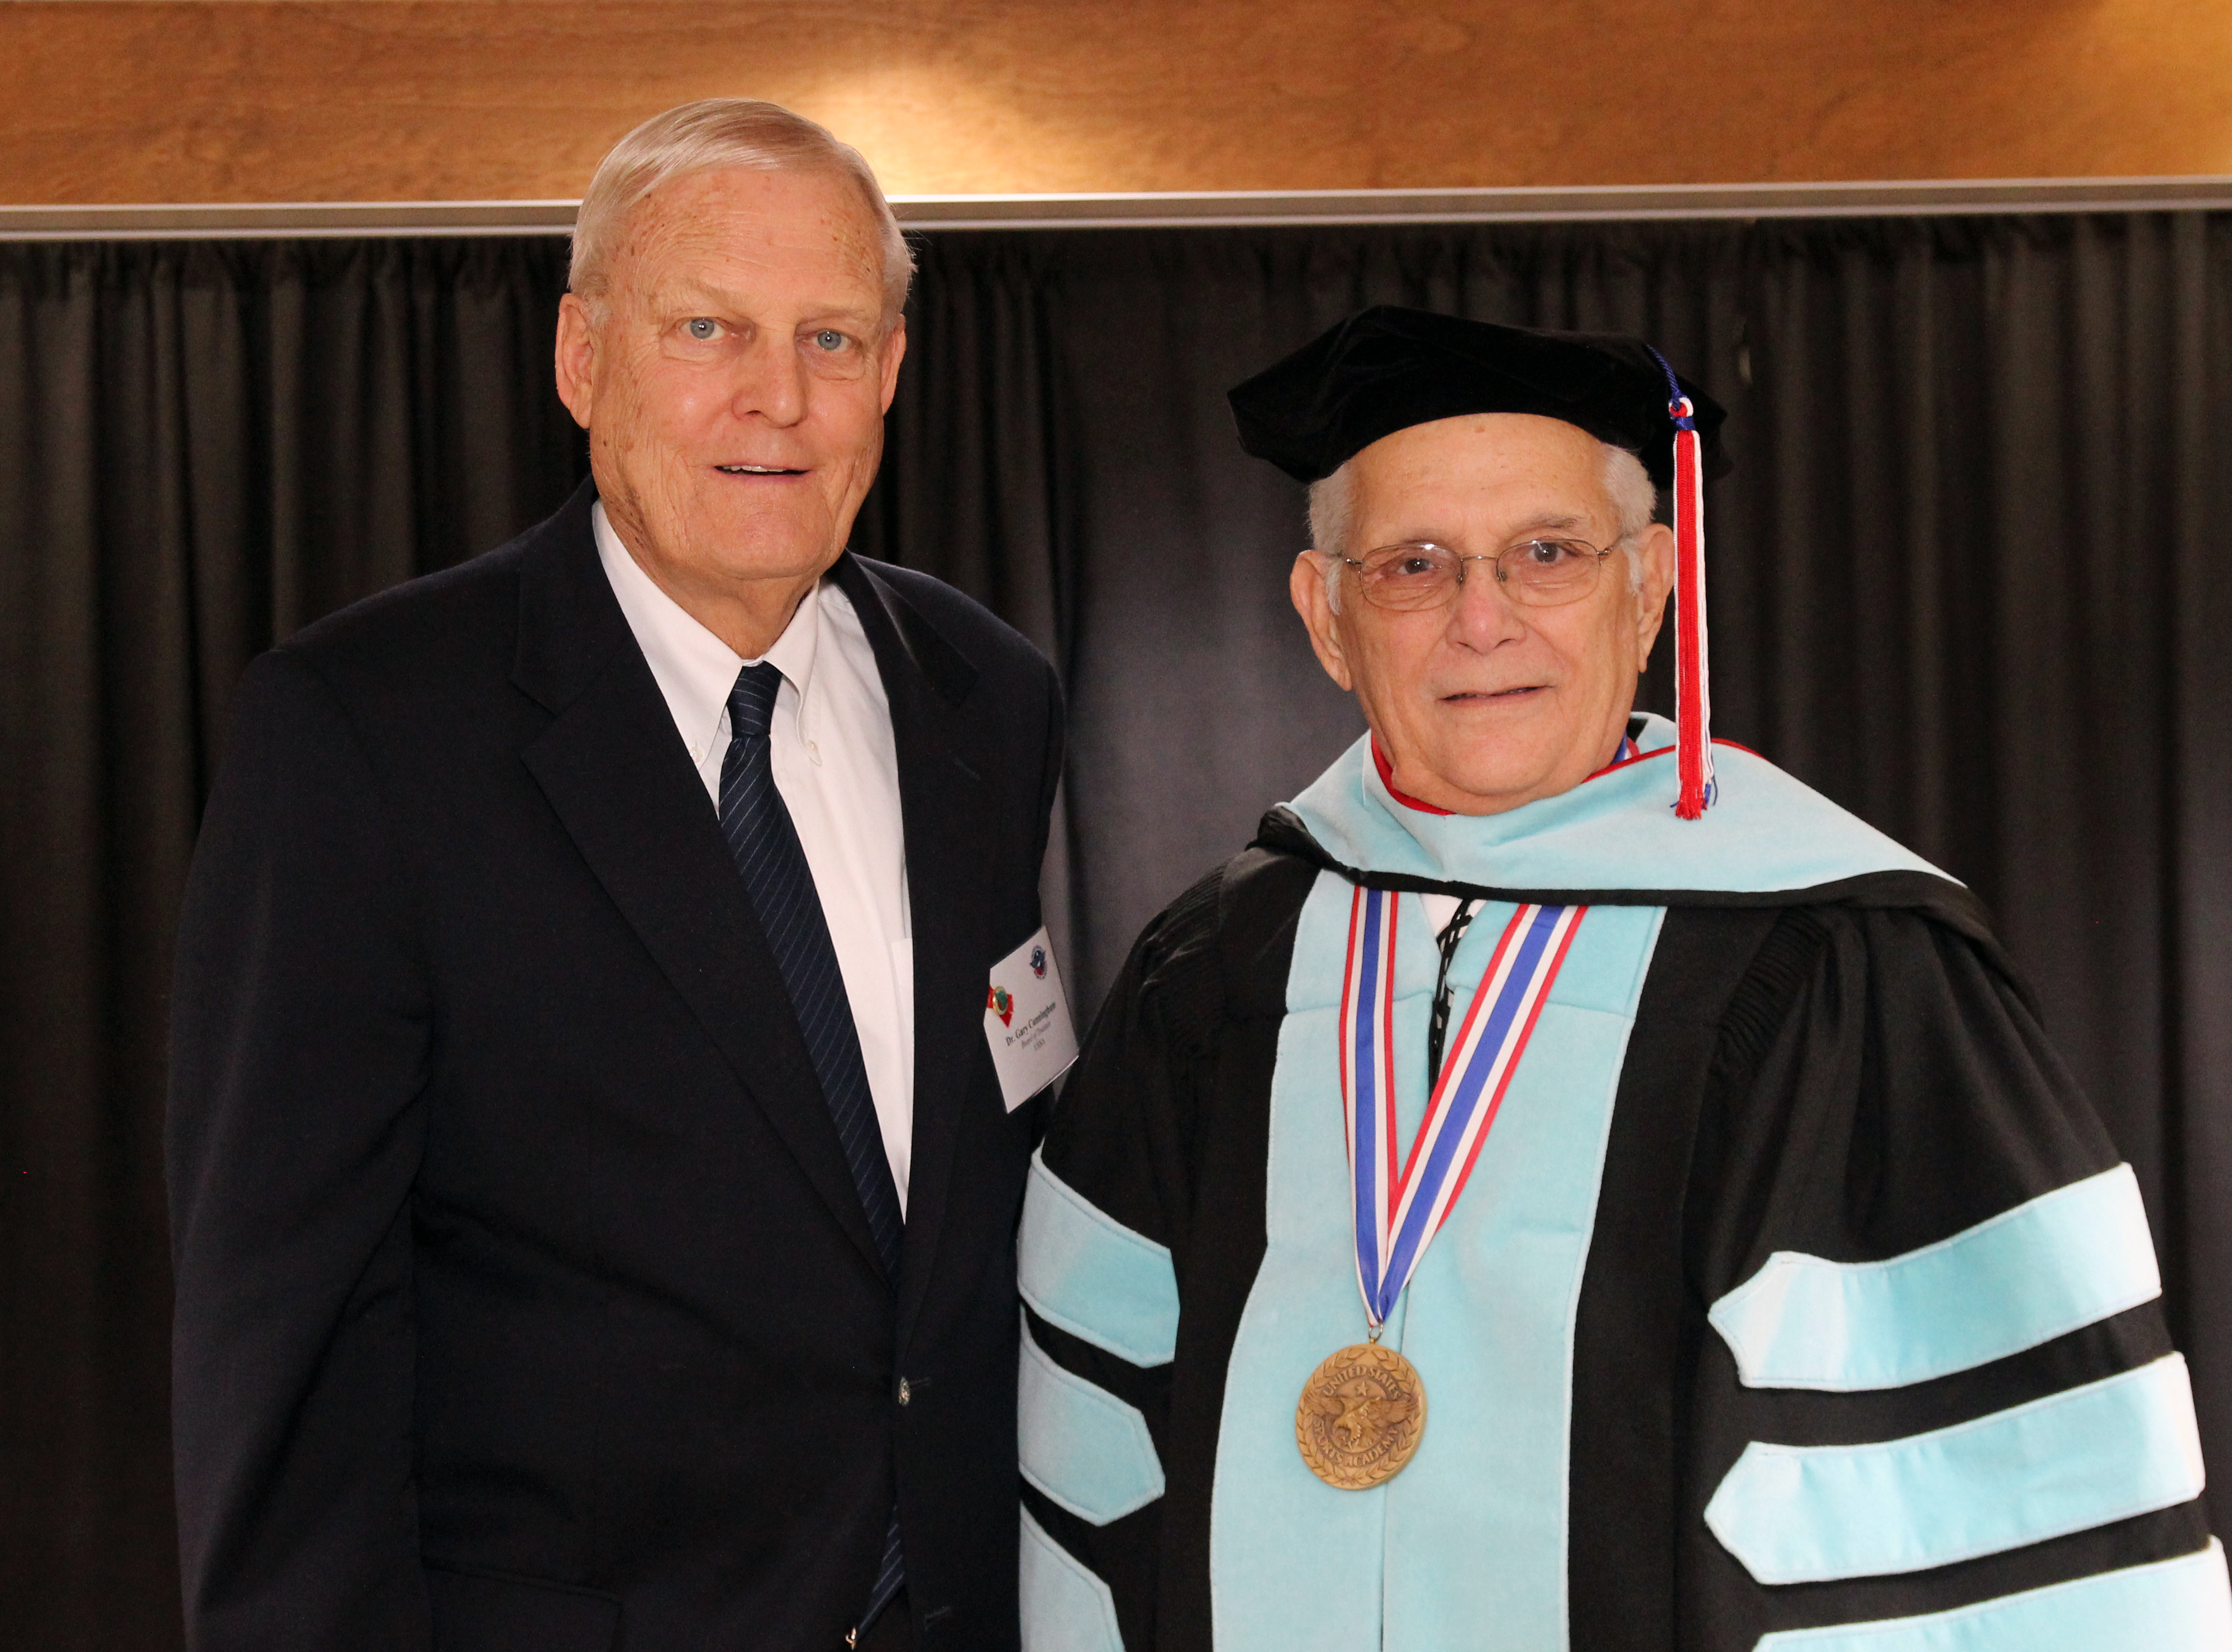 Cardona Awarded International Honorary Doctorate from United States Sports Academy